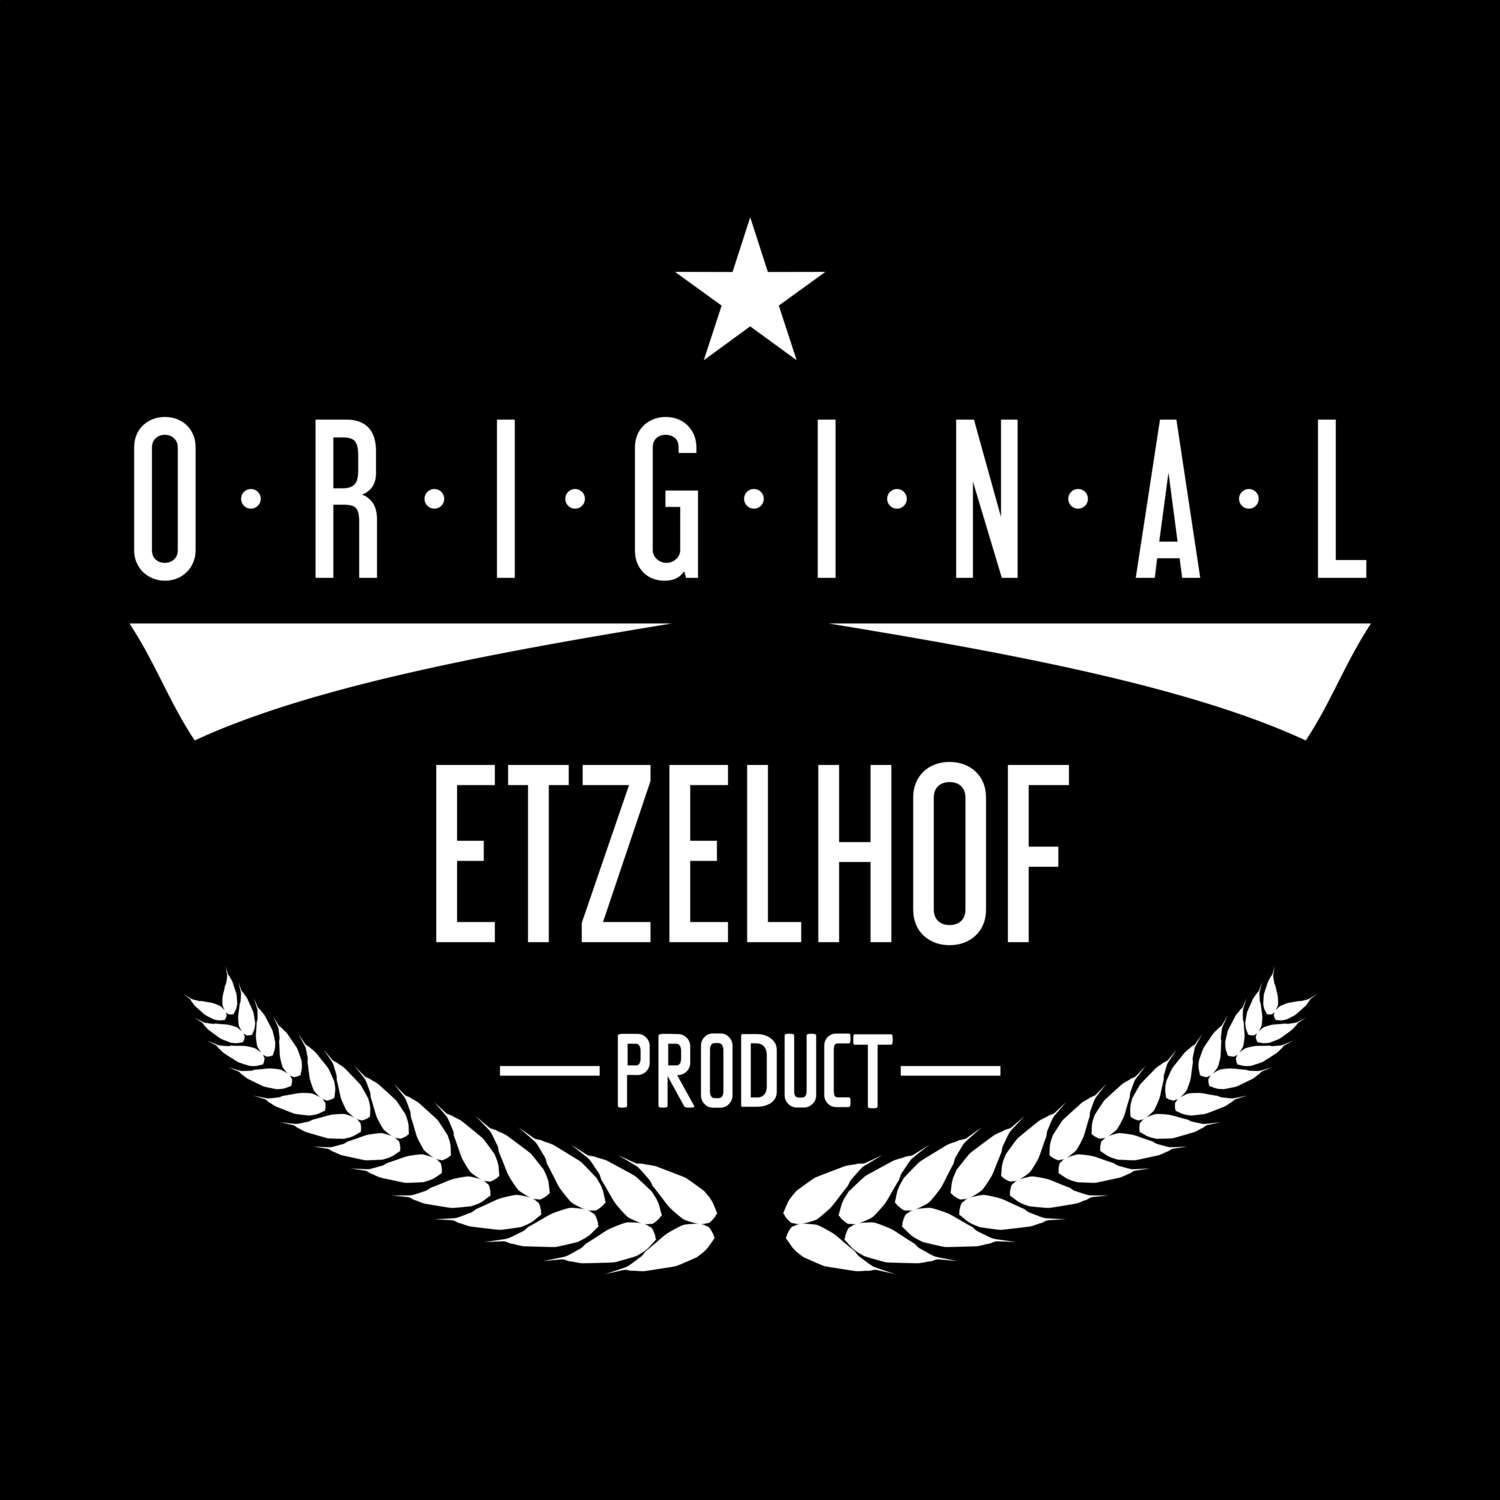 Etzelhof T-Shirt »Original Product«